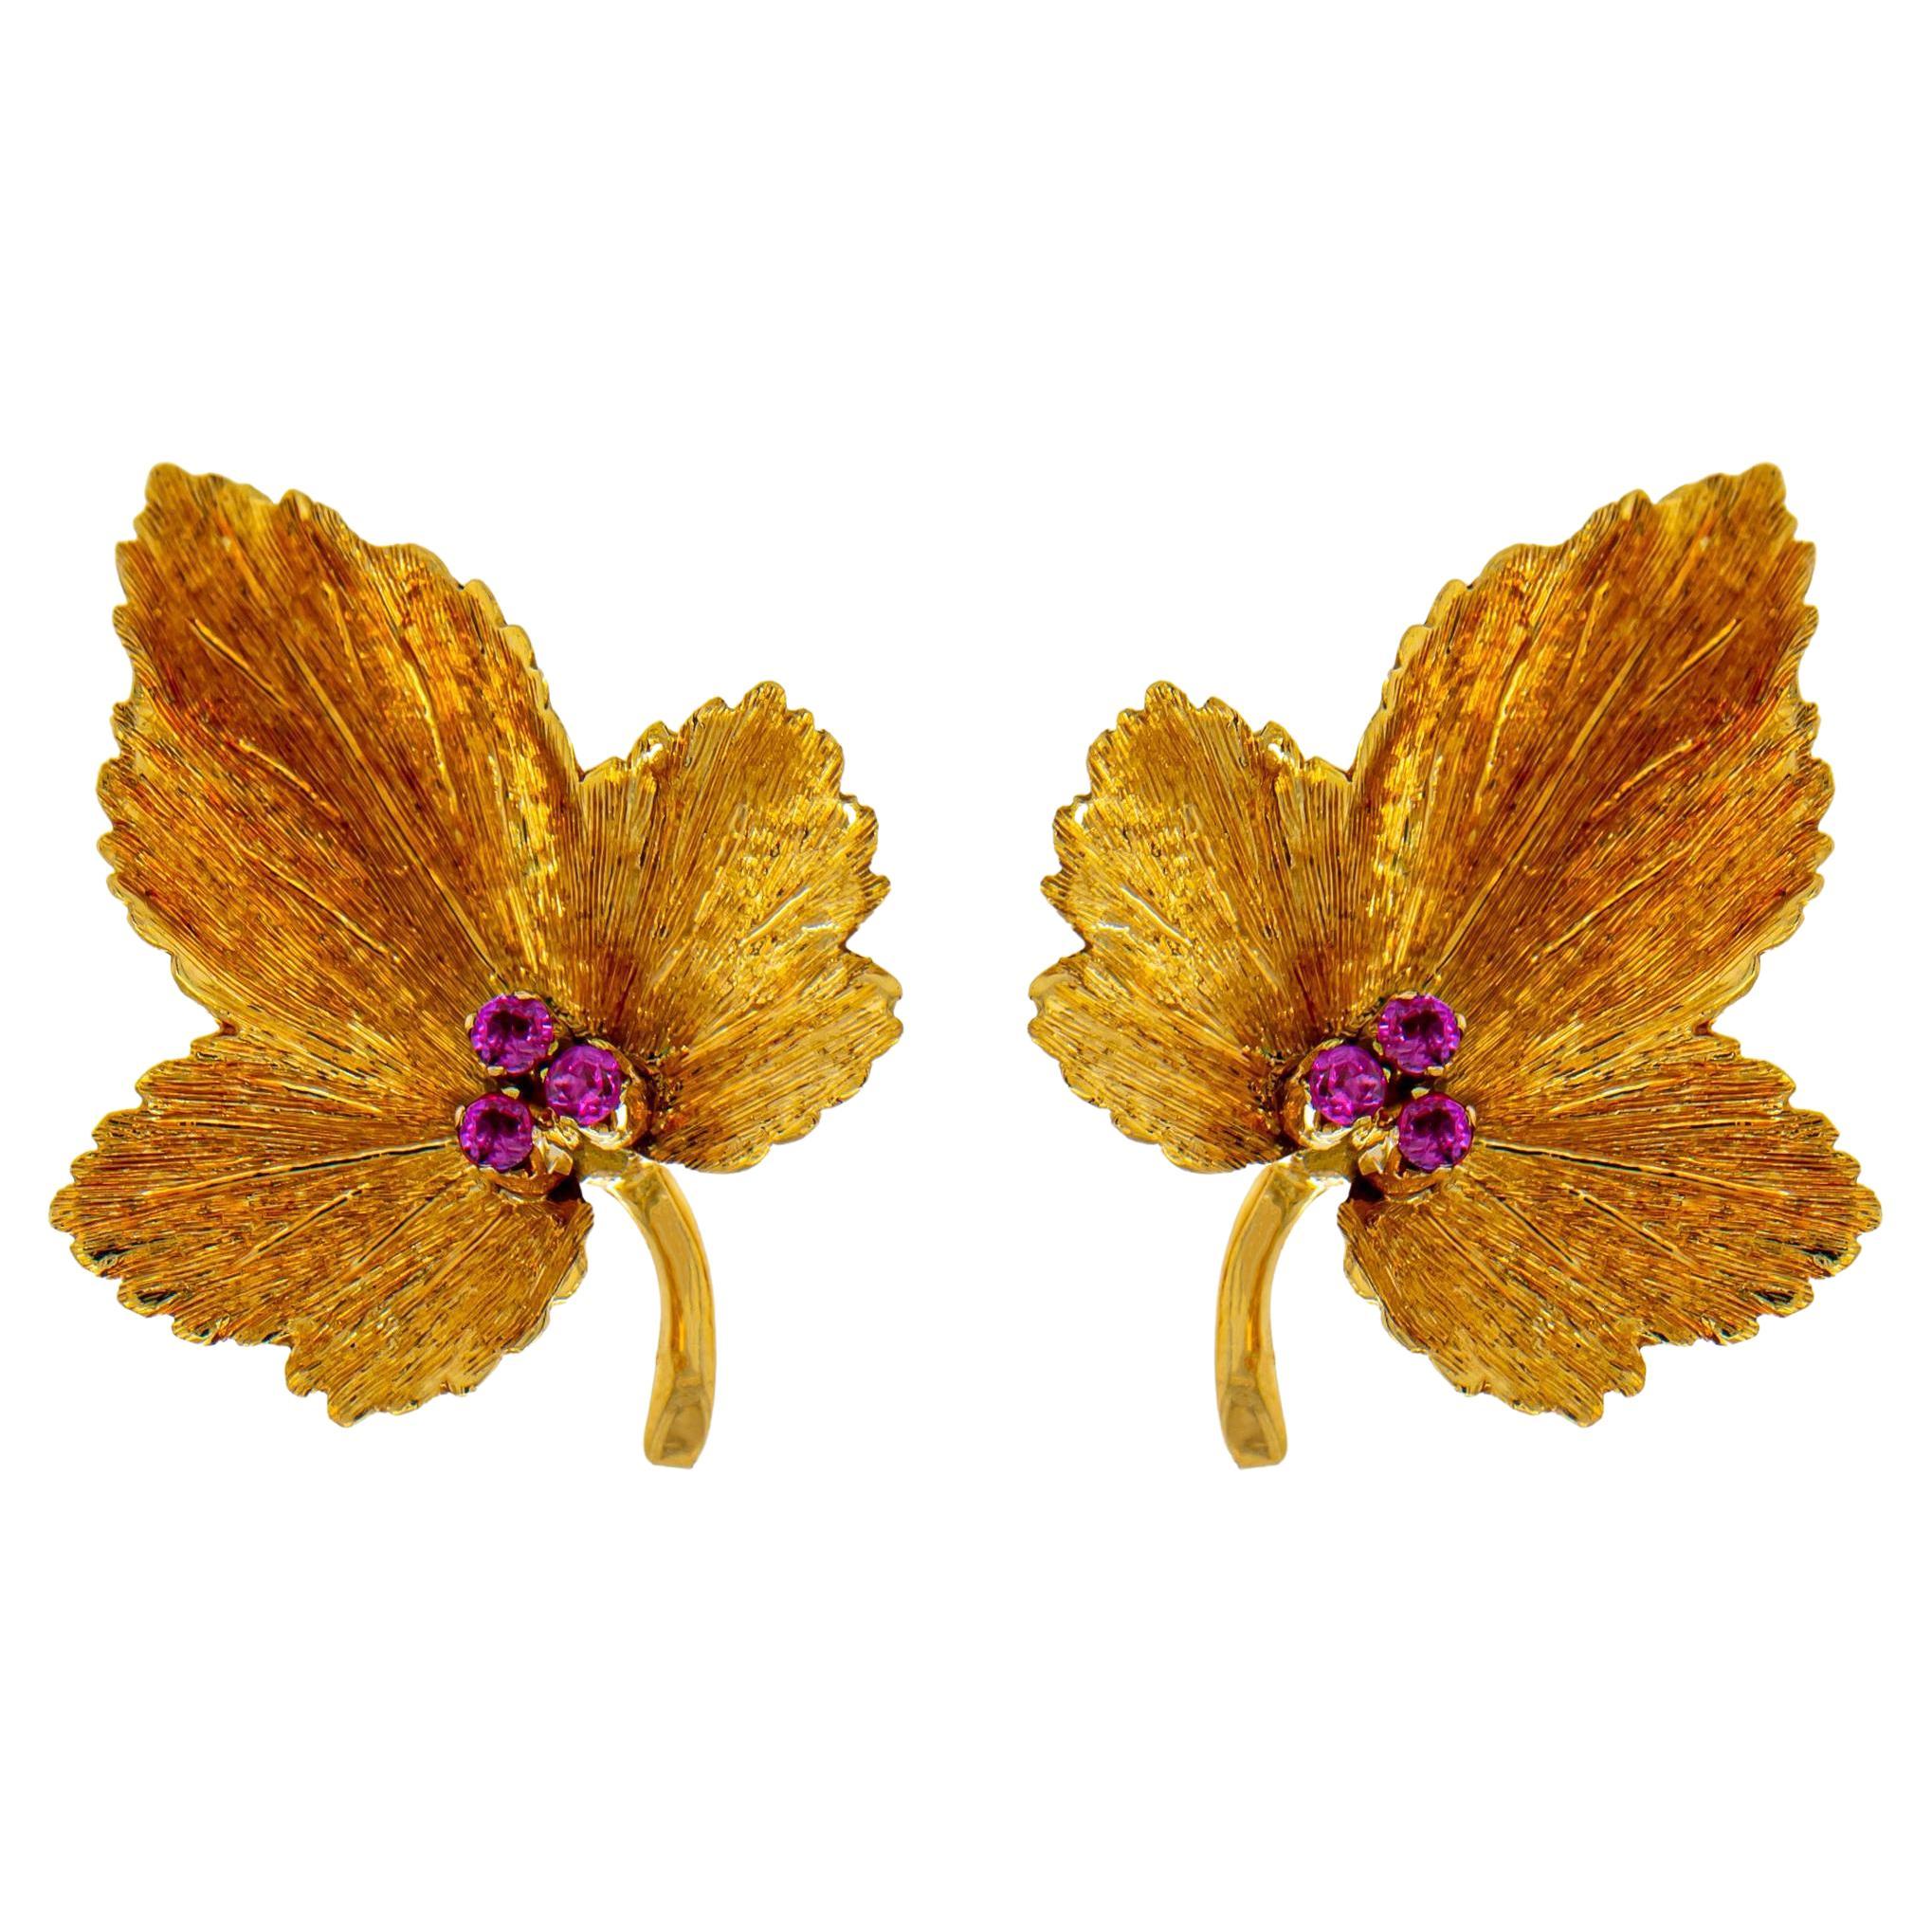 Tiffany & Co. Ruby Autumn Leaf Earrings 18k Gold Original Pouch